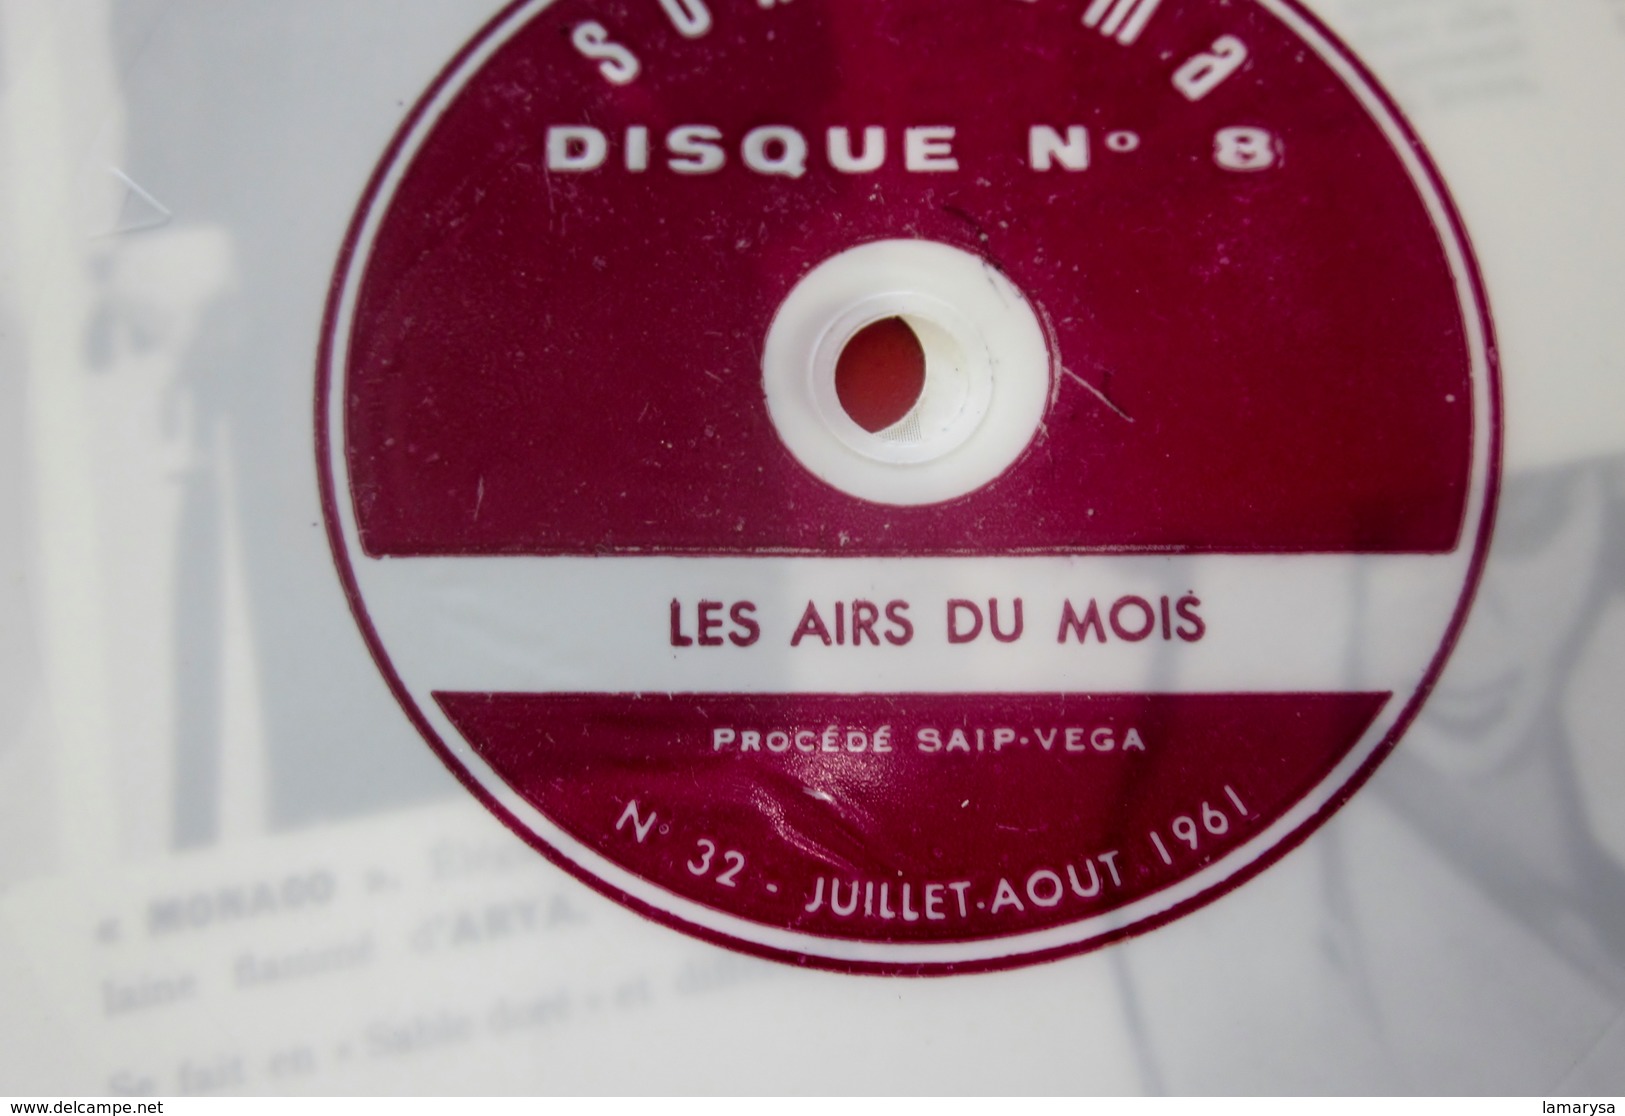 Magazine Sonorama N° 32-Août 1961-Musique Disque Vinyle Format spécial Algerie-De gaulle-Ursula Andress-Ray Charles-Pubs